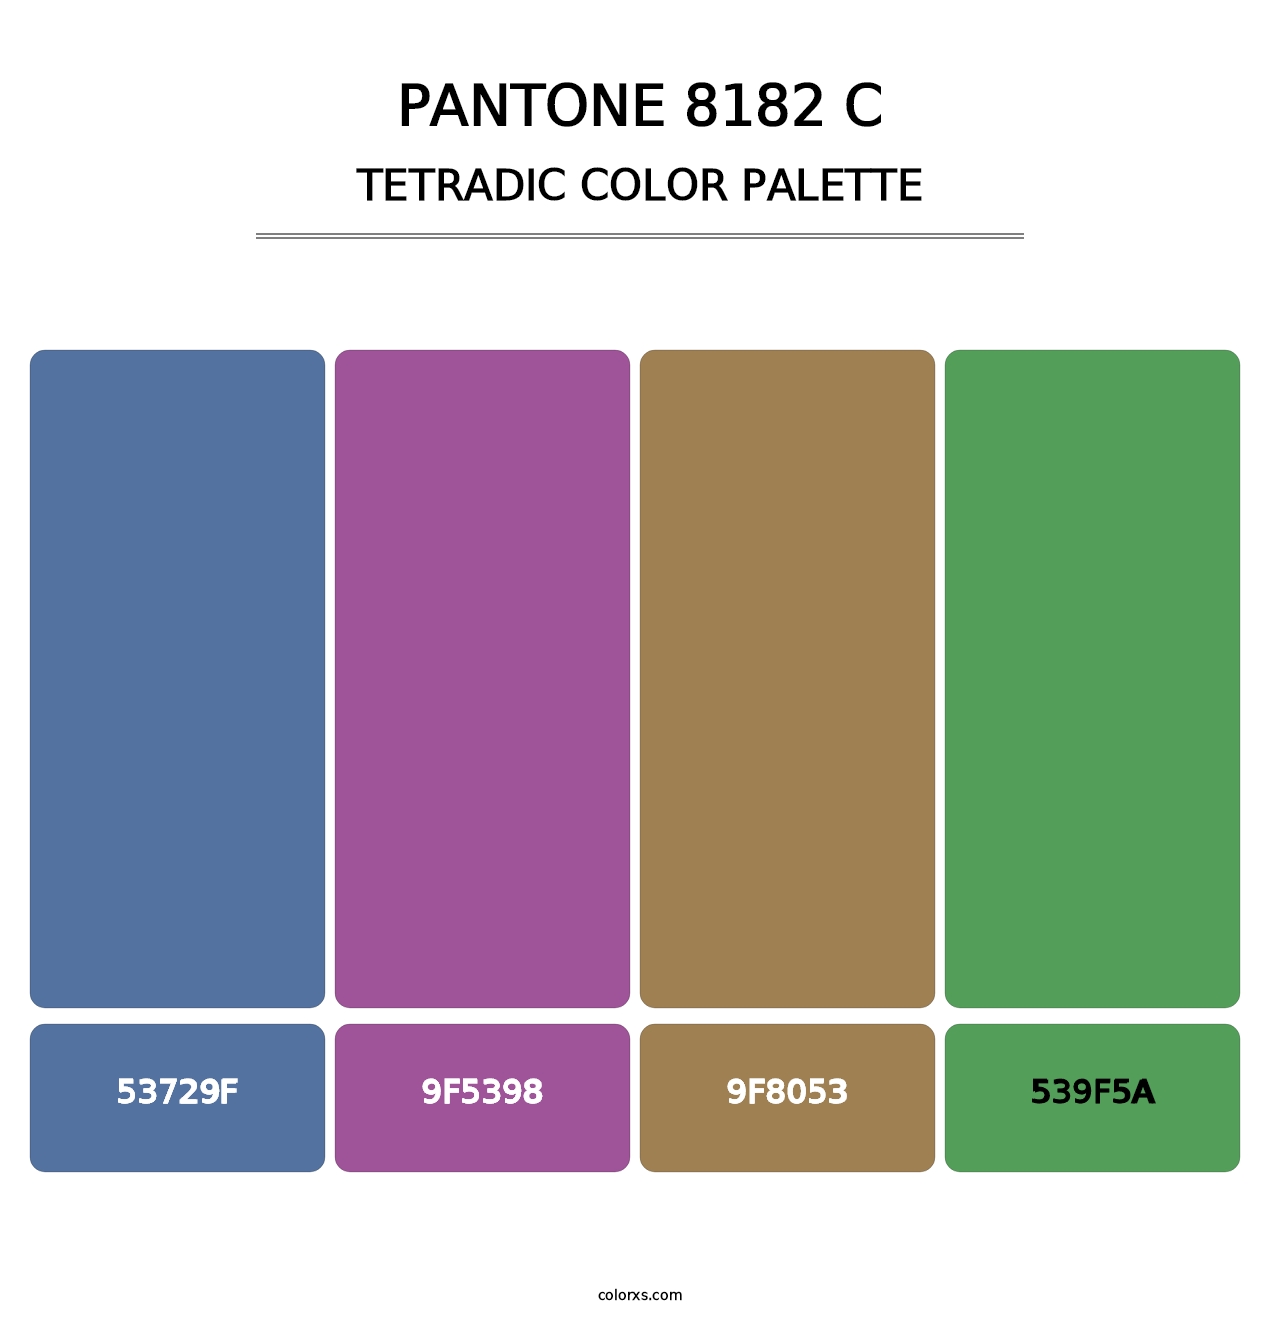 PANTONE 8182 C - Tetradic Color Palette